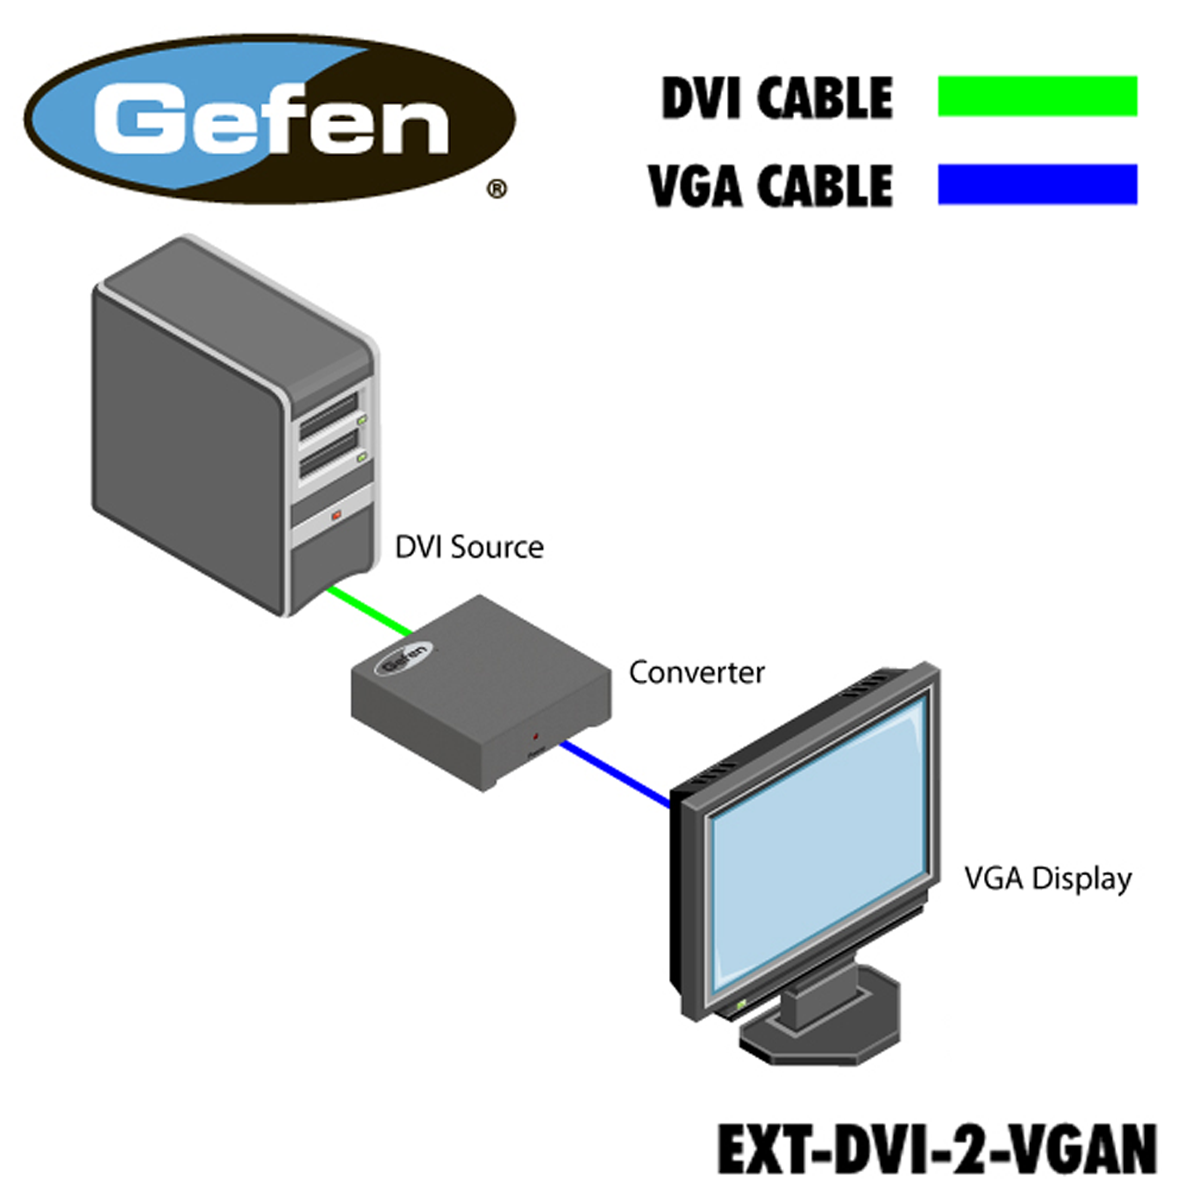 EXT-DVI-2-VGA